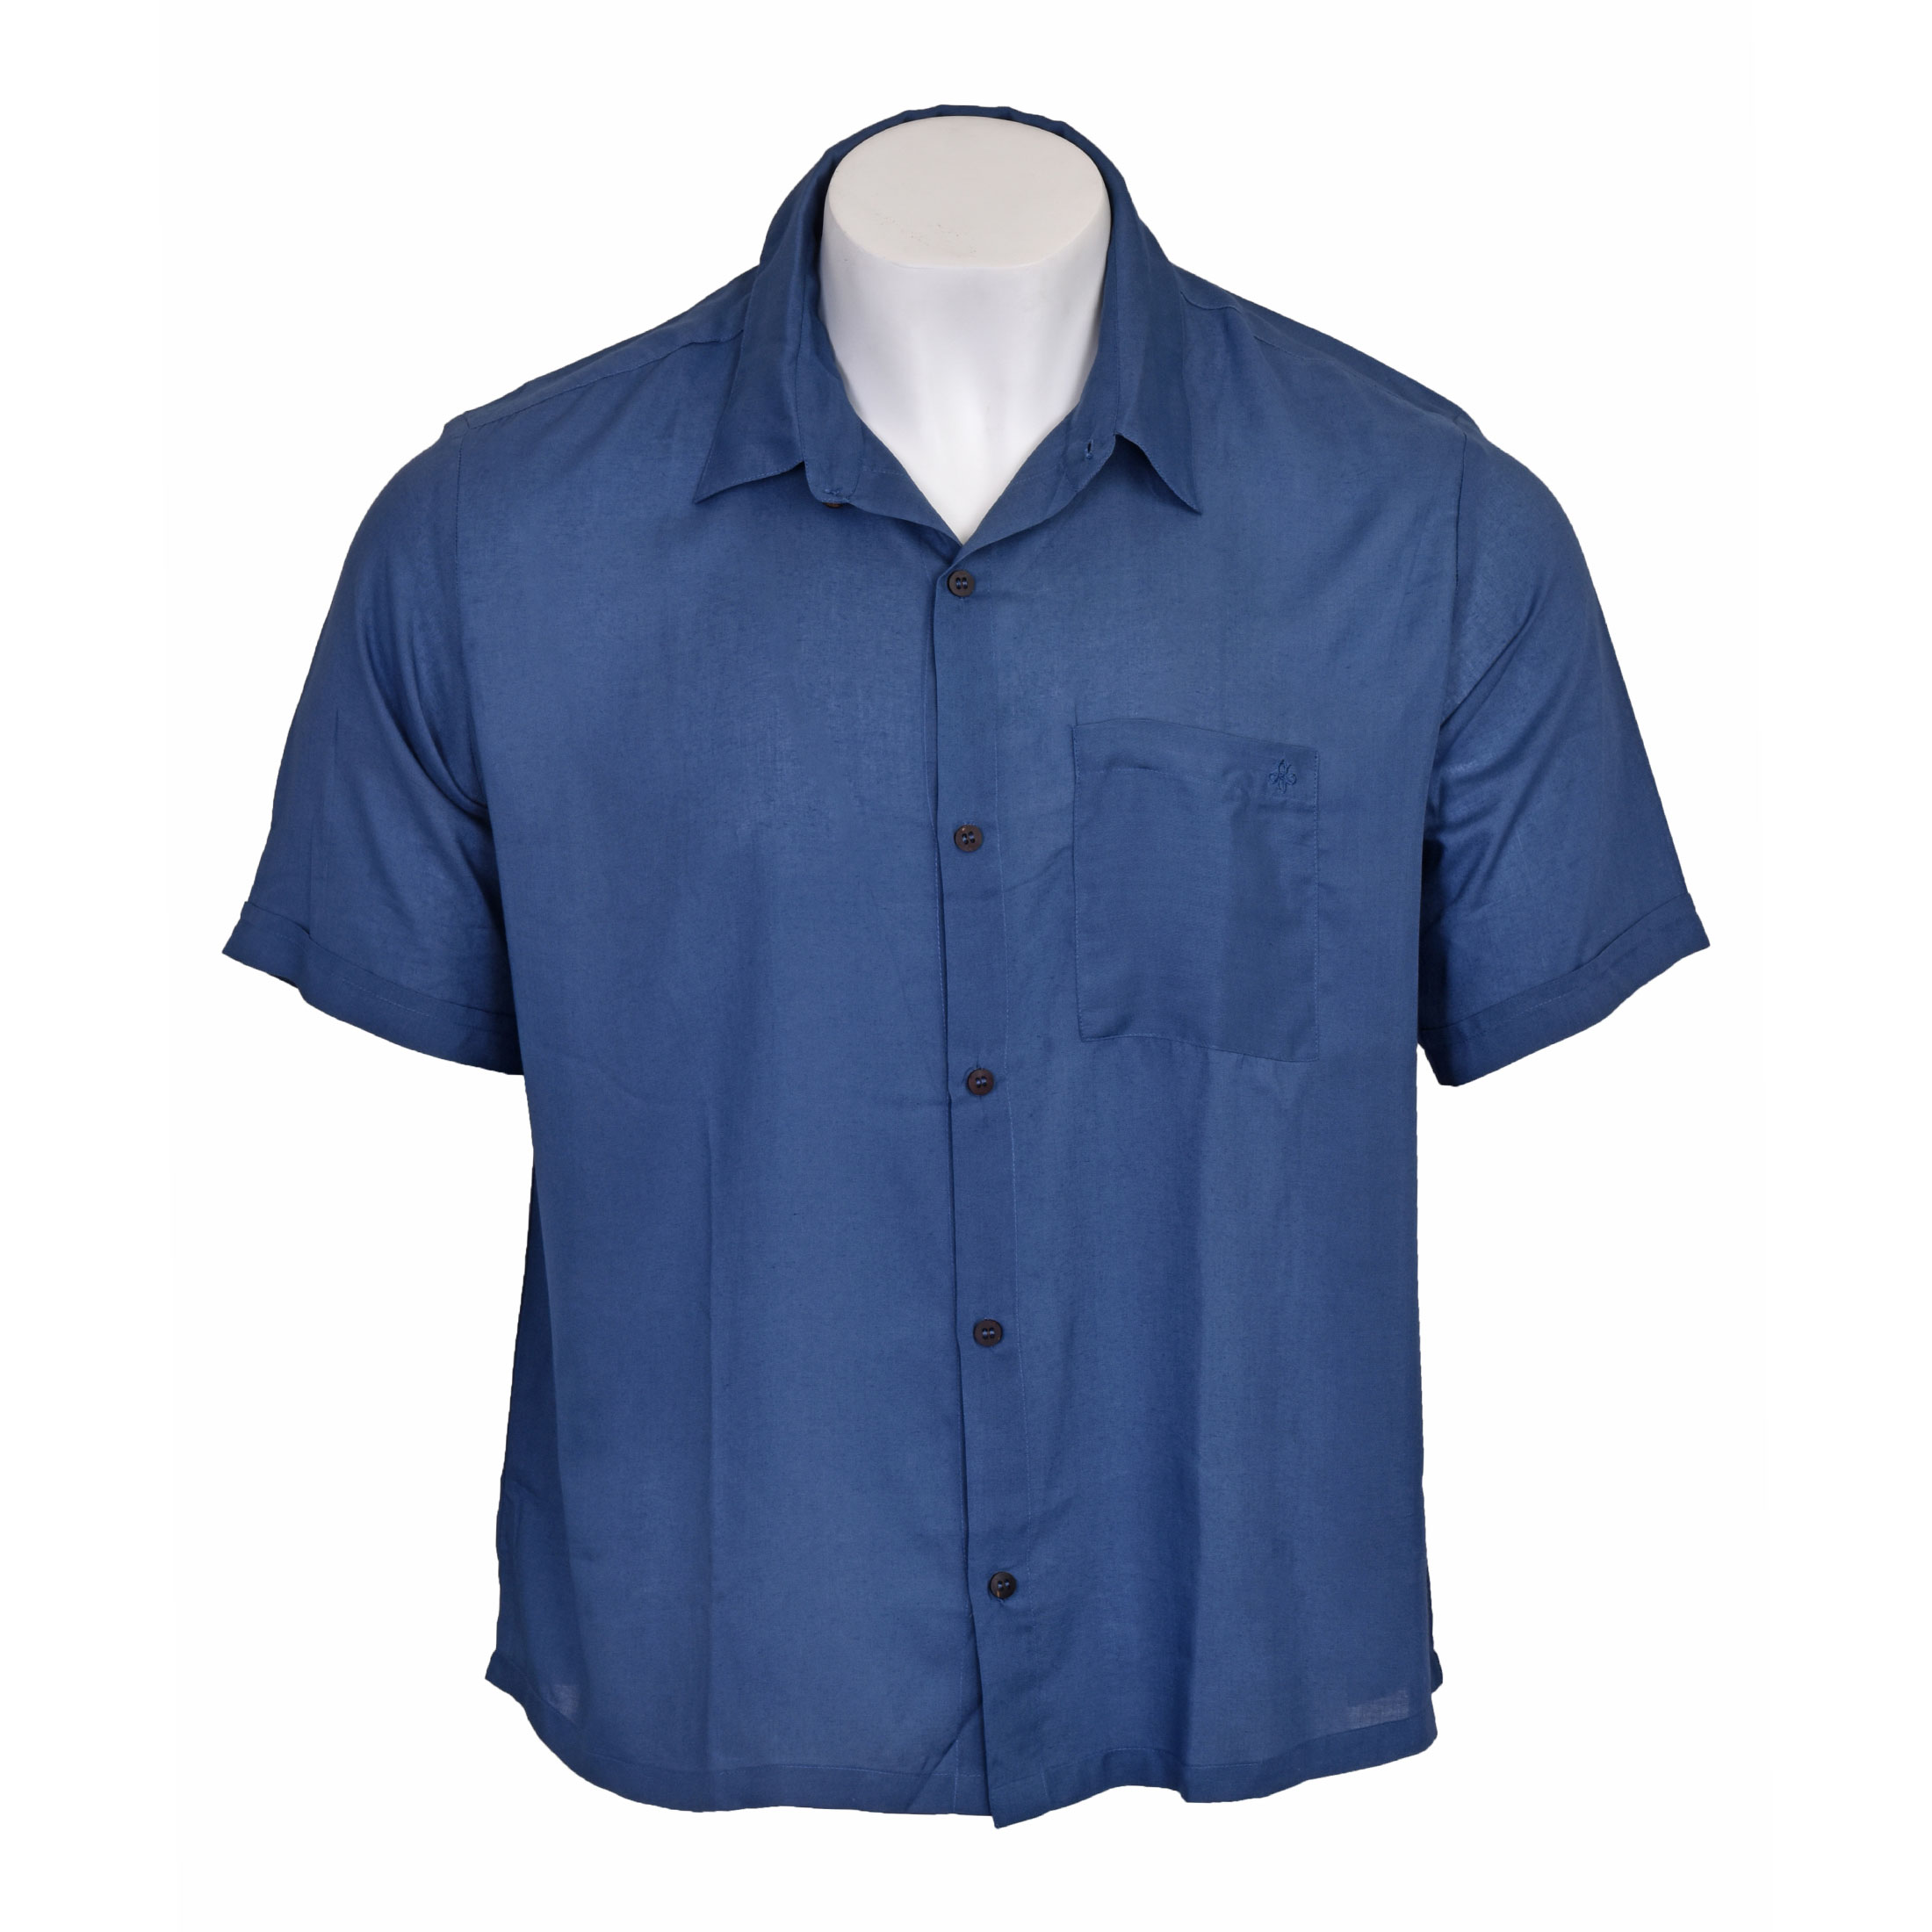 Tacana Rayon Shirt Short Sleeve Print 2 Front View